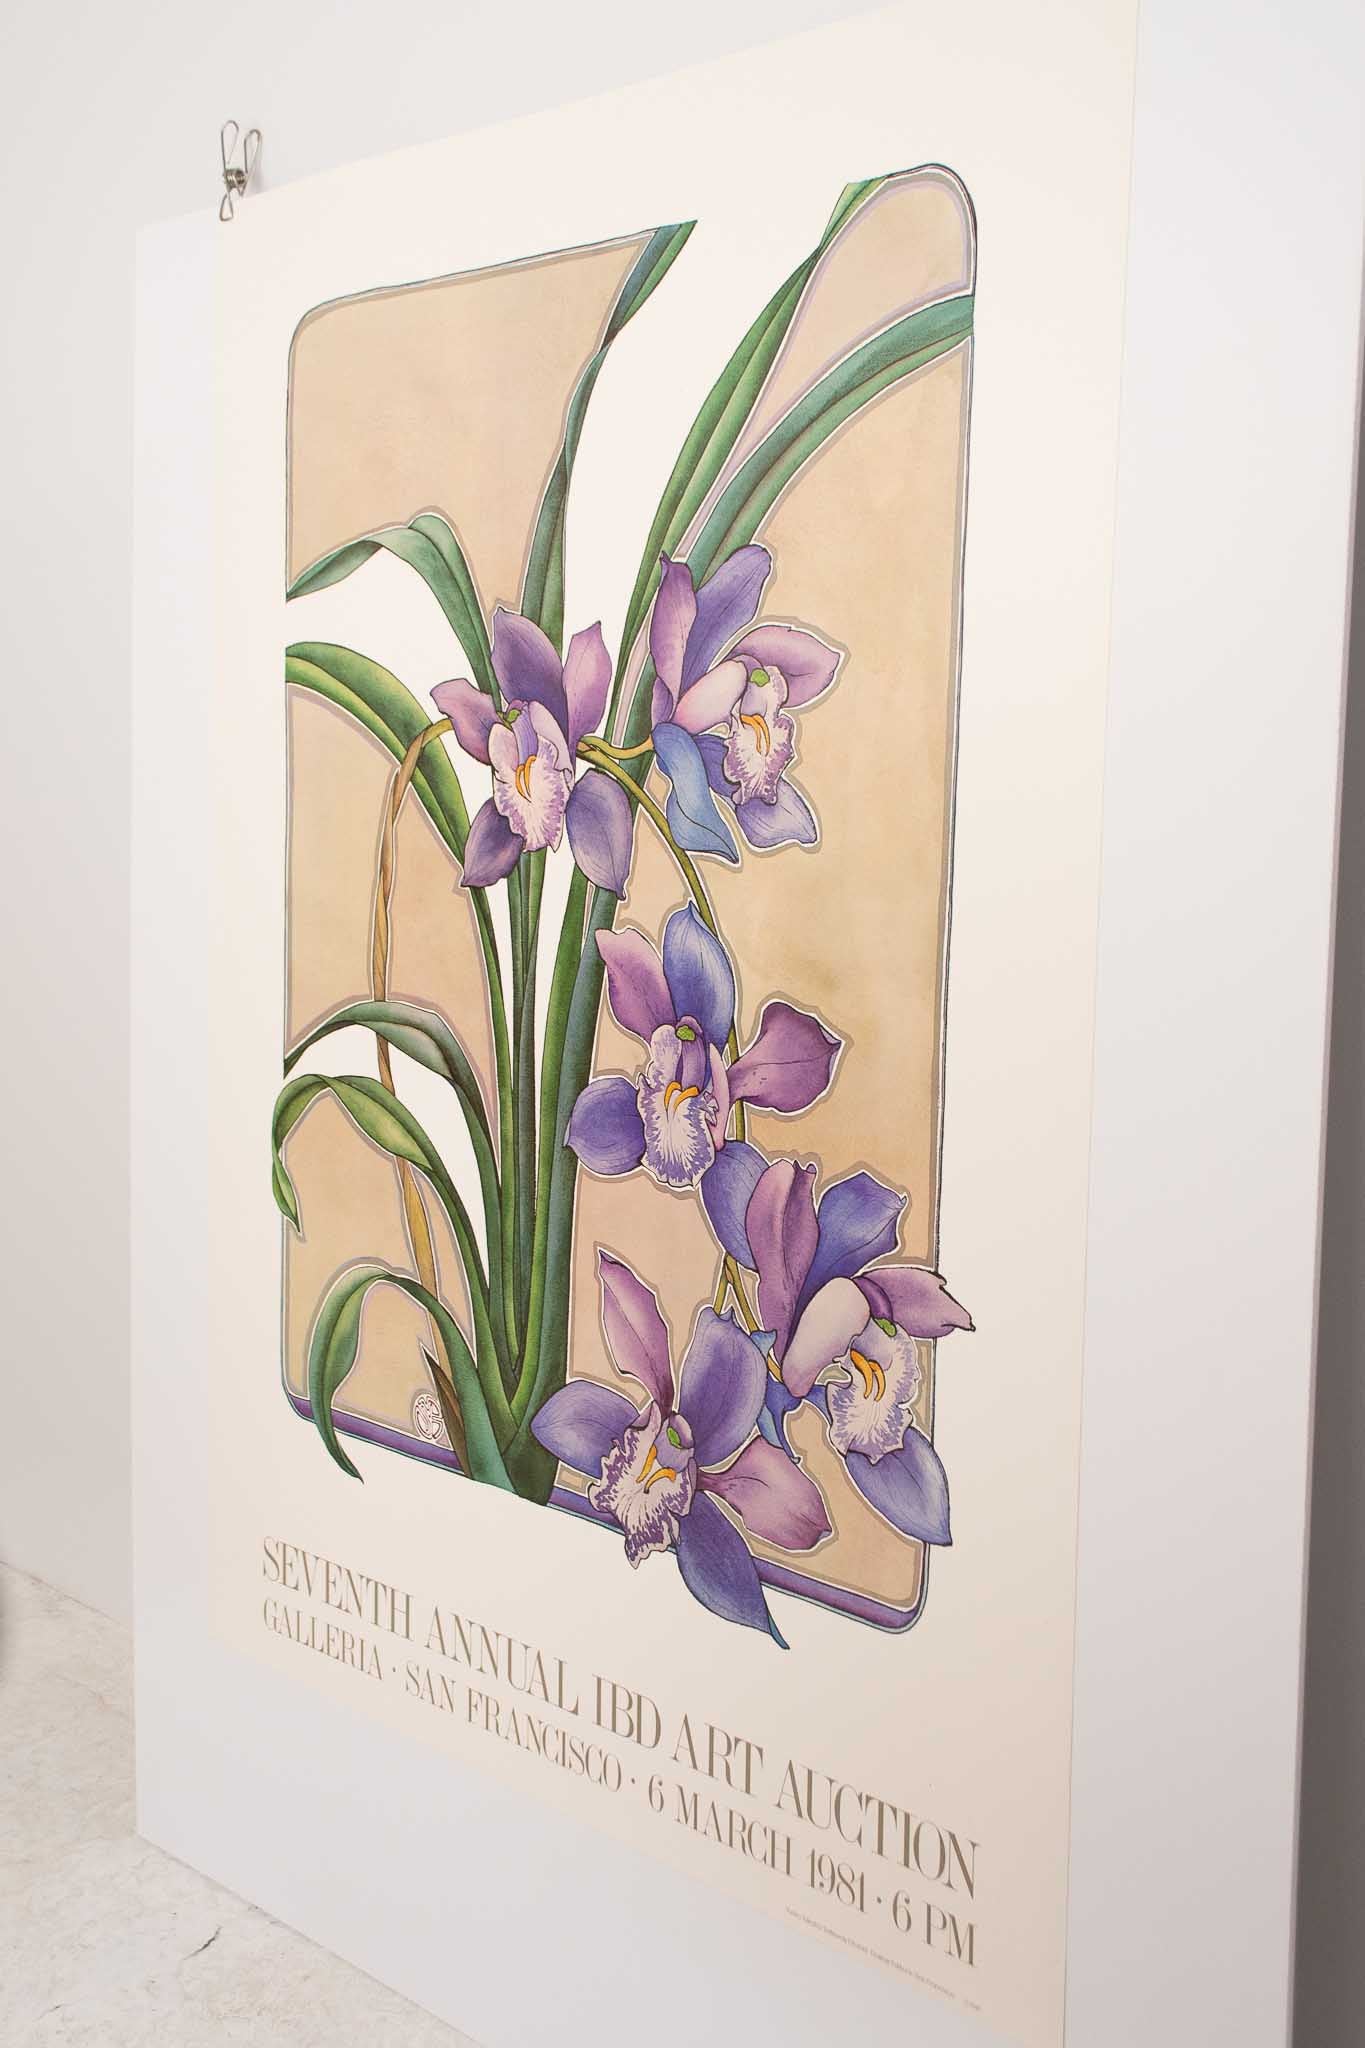 Yuriko Takata "Safeway Orchid" IBD Art Auction Print